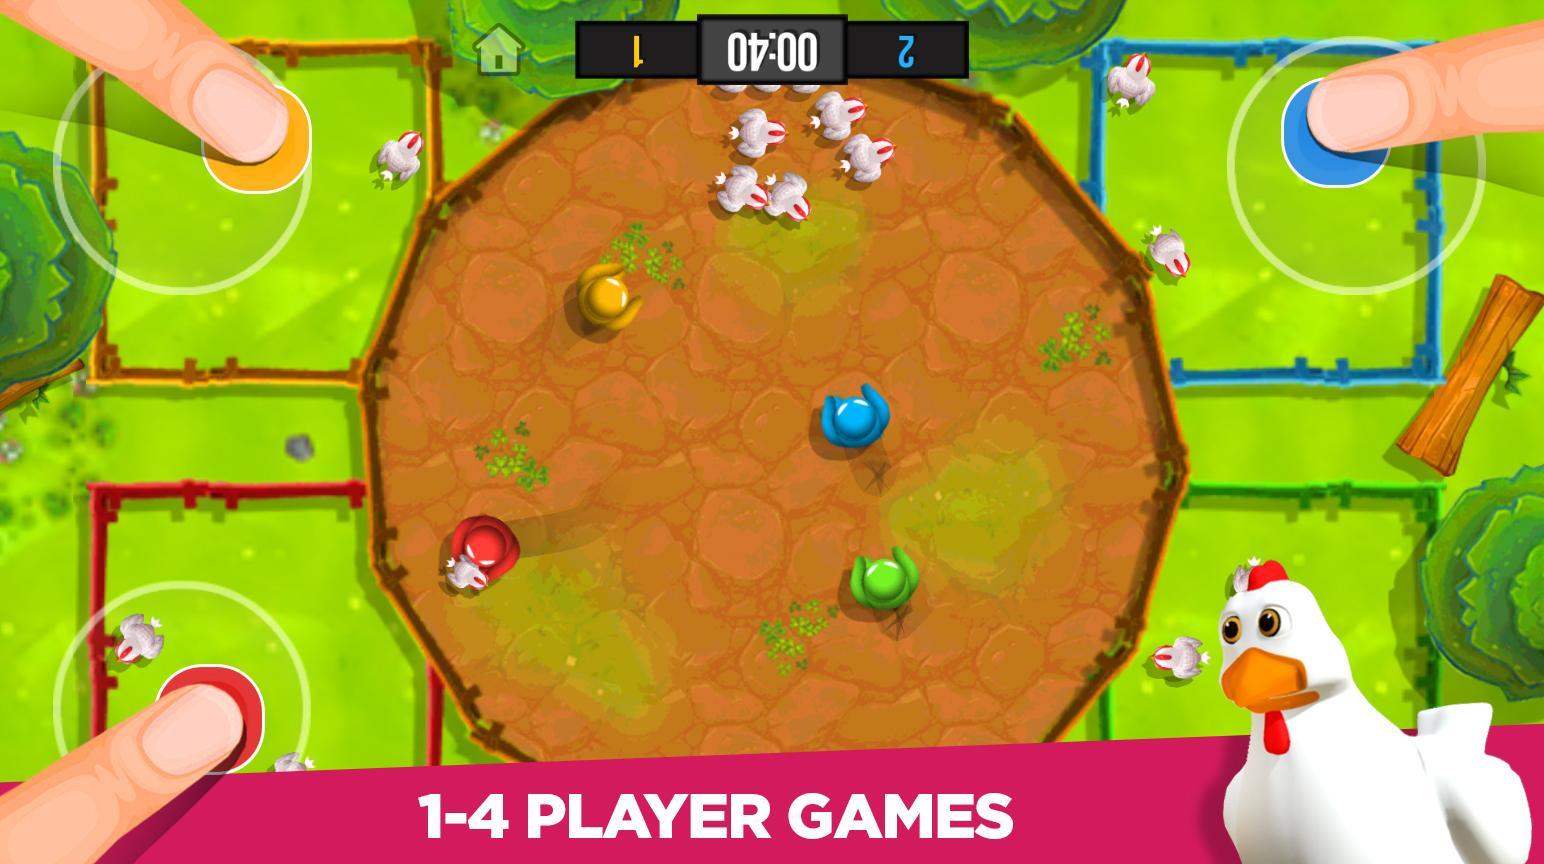 Stickman Party 1 2 3 4 Player Games Free 1.9.6.2 Screenshot 2